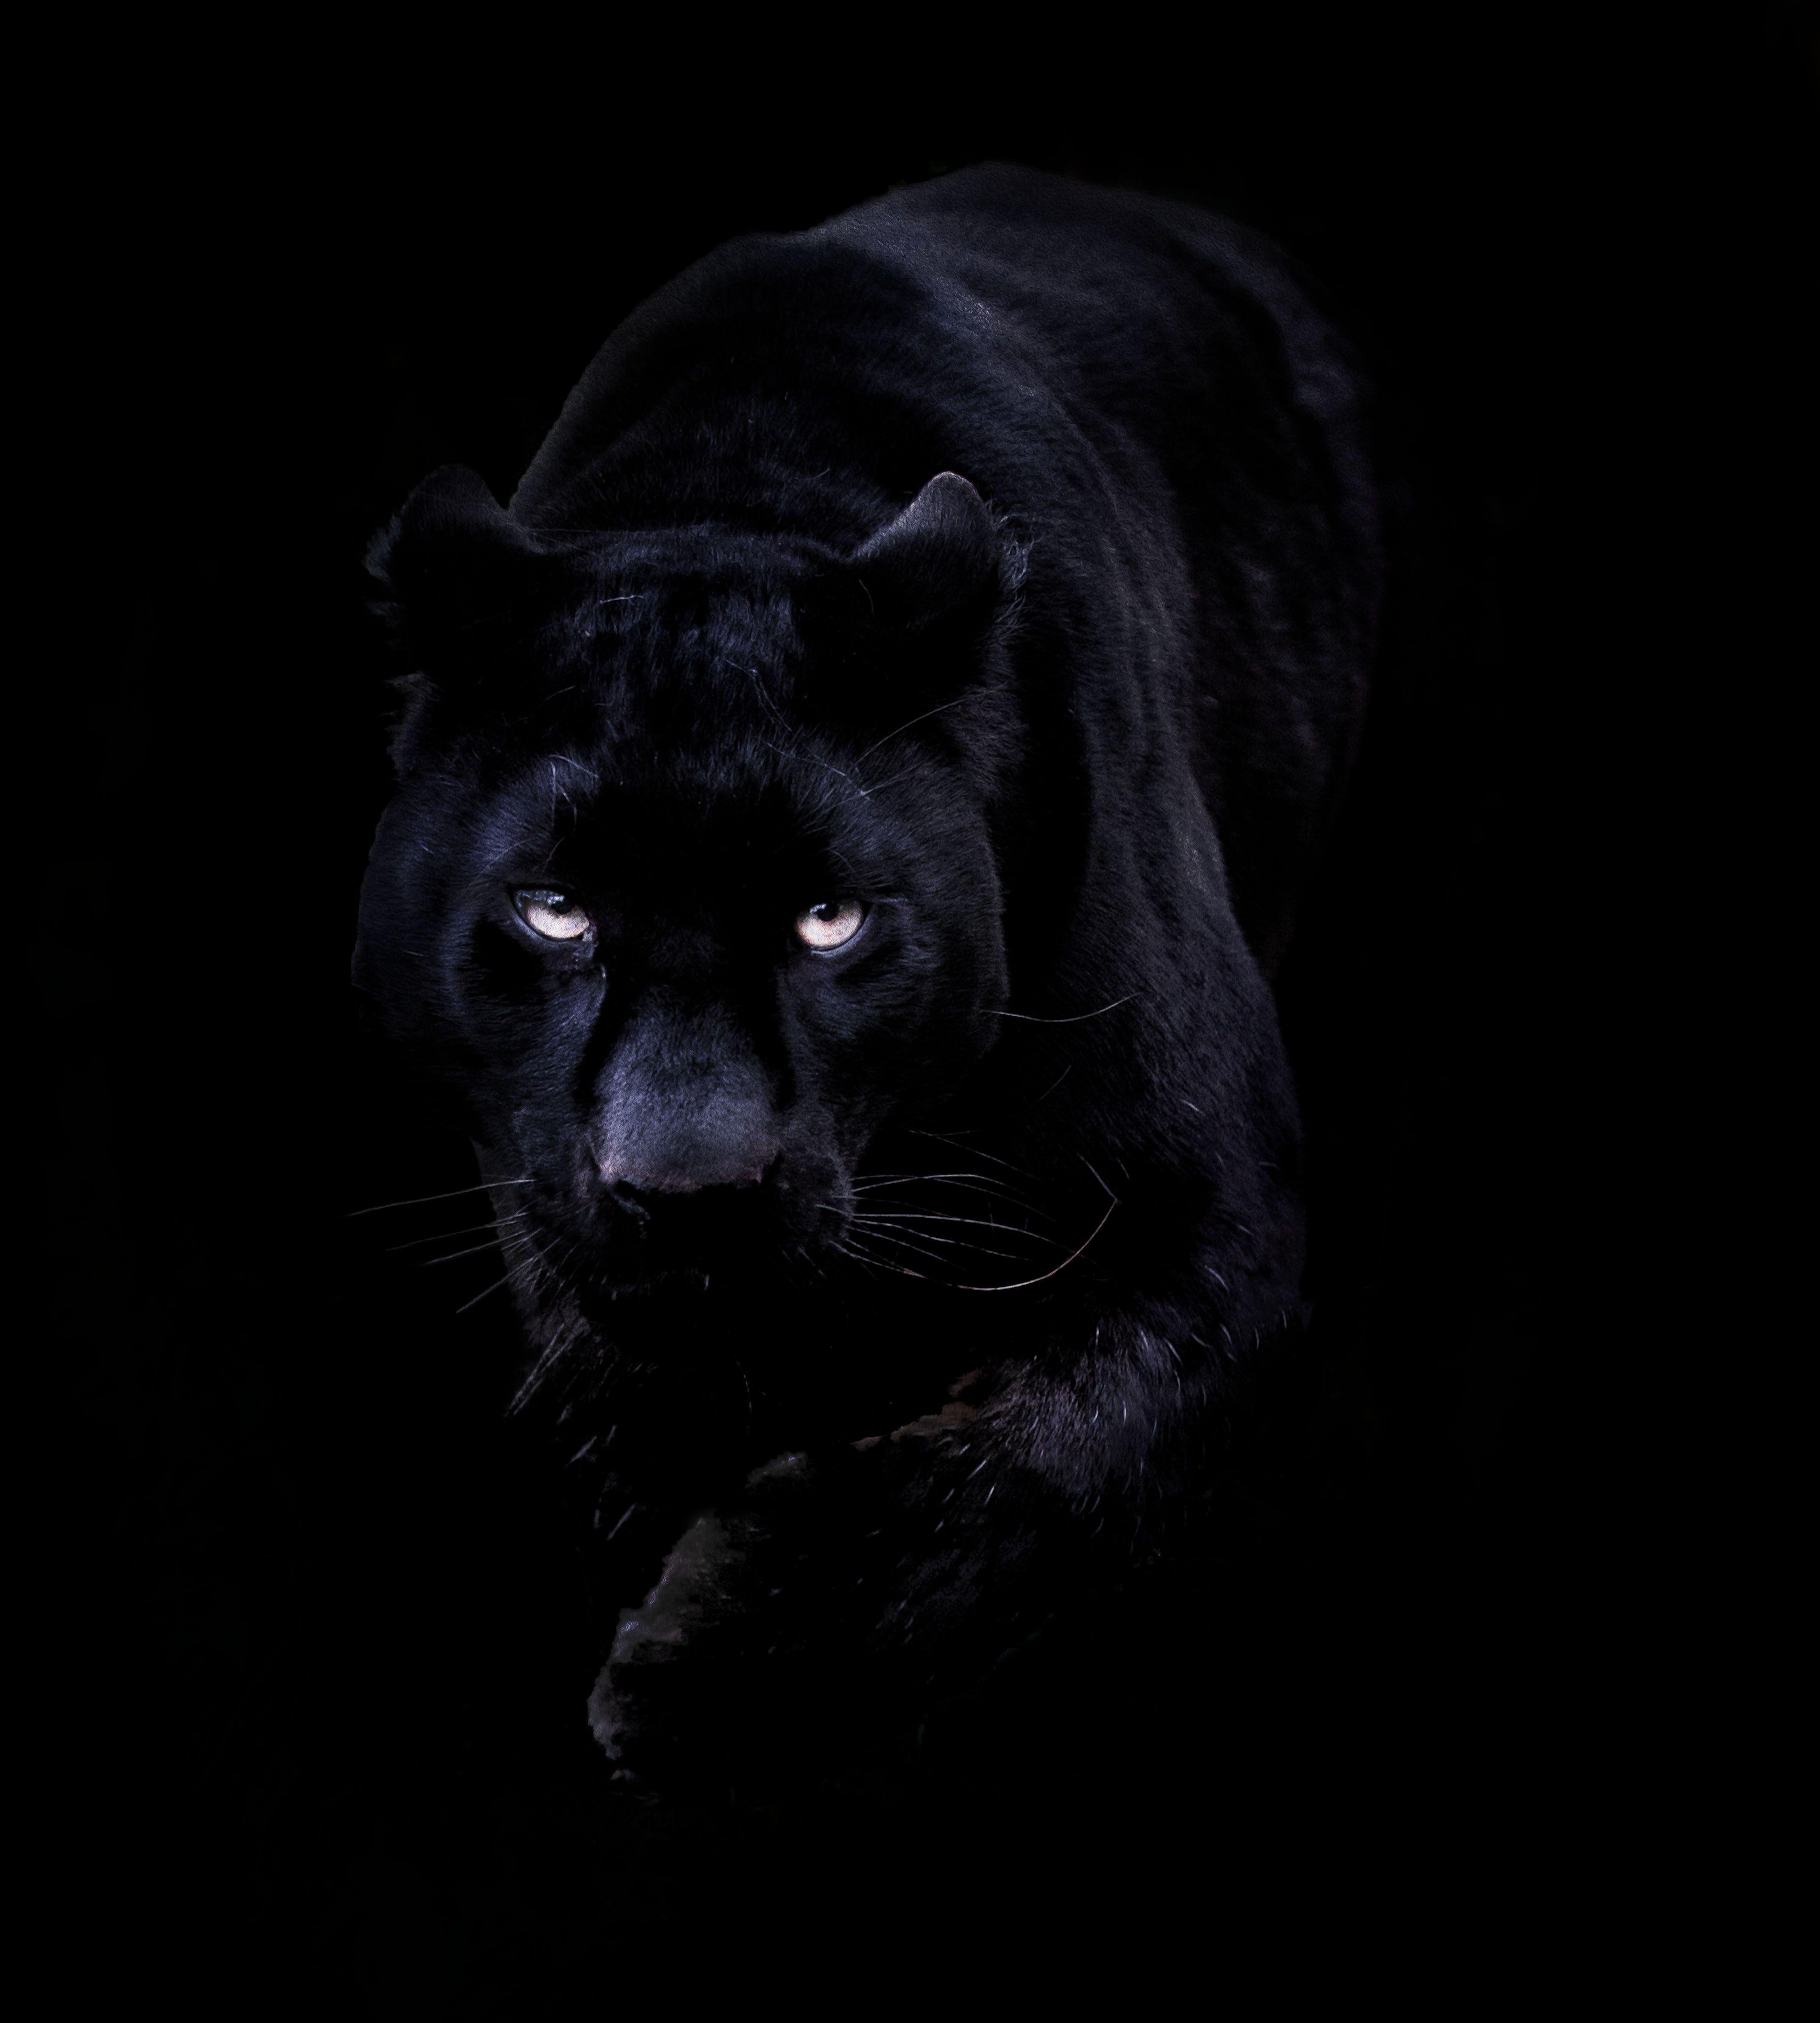 It's in the eyes. Cats, Black jaguar